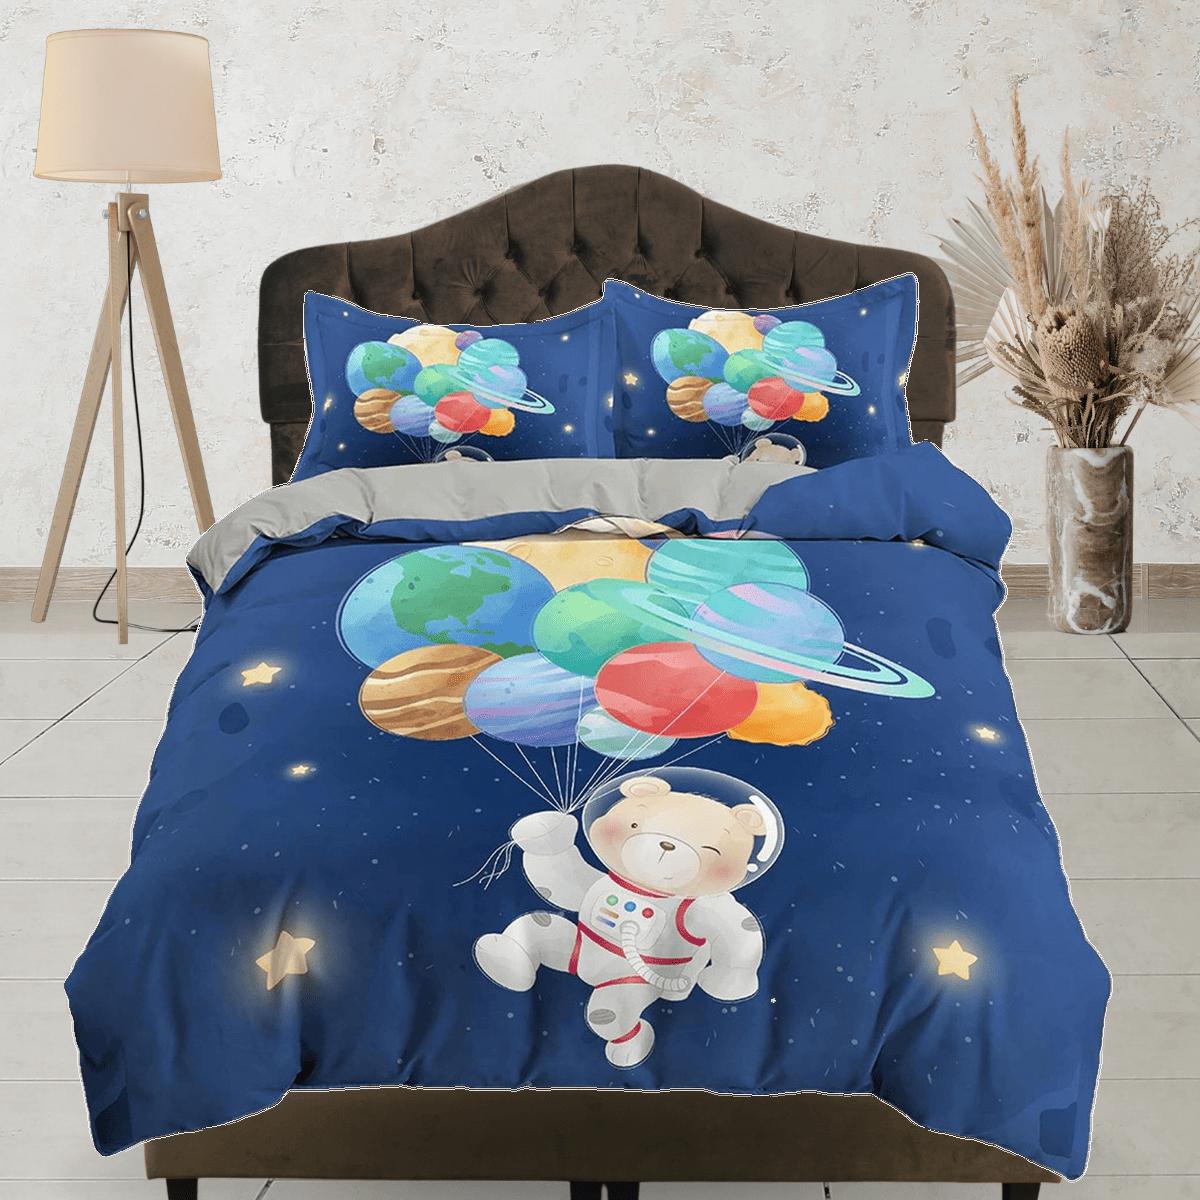 daintyduvet Cute bear astronaut with planets balloon, blue toddler bedding, duvet cover kids, crib bedding, baby zipper bedding, king queen full twin